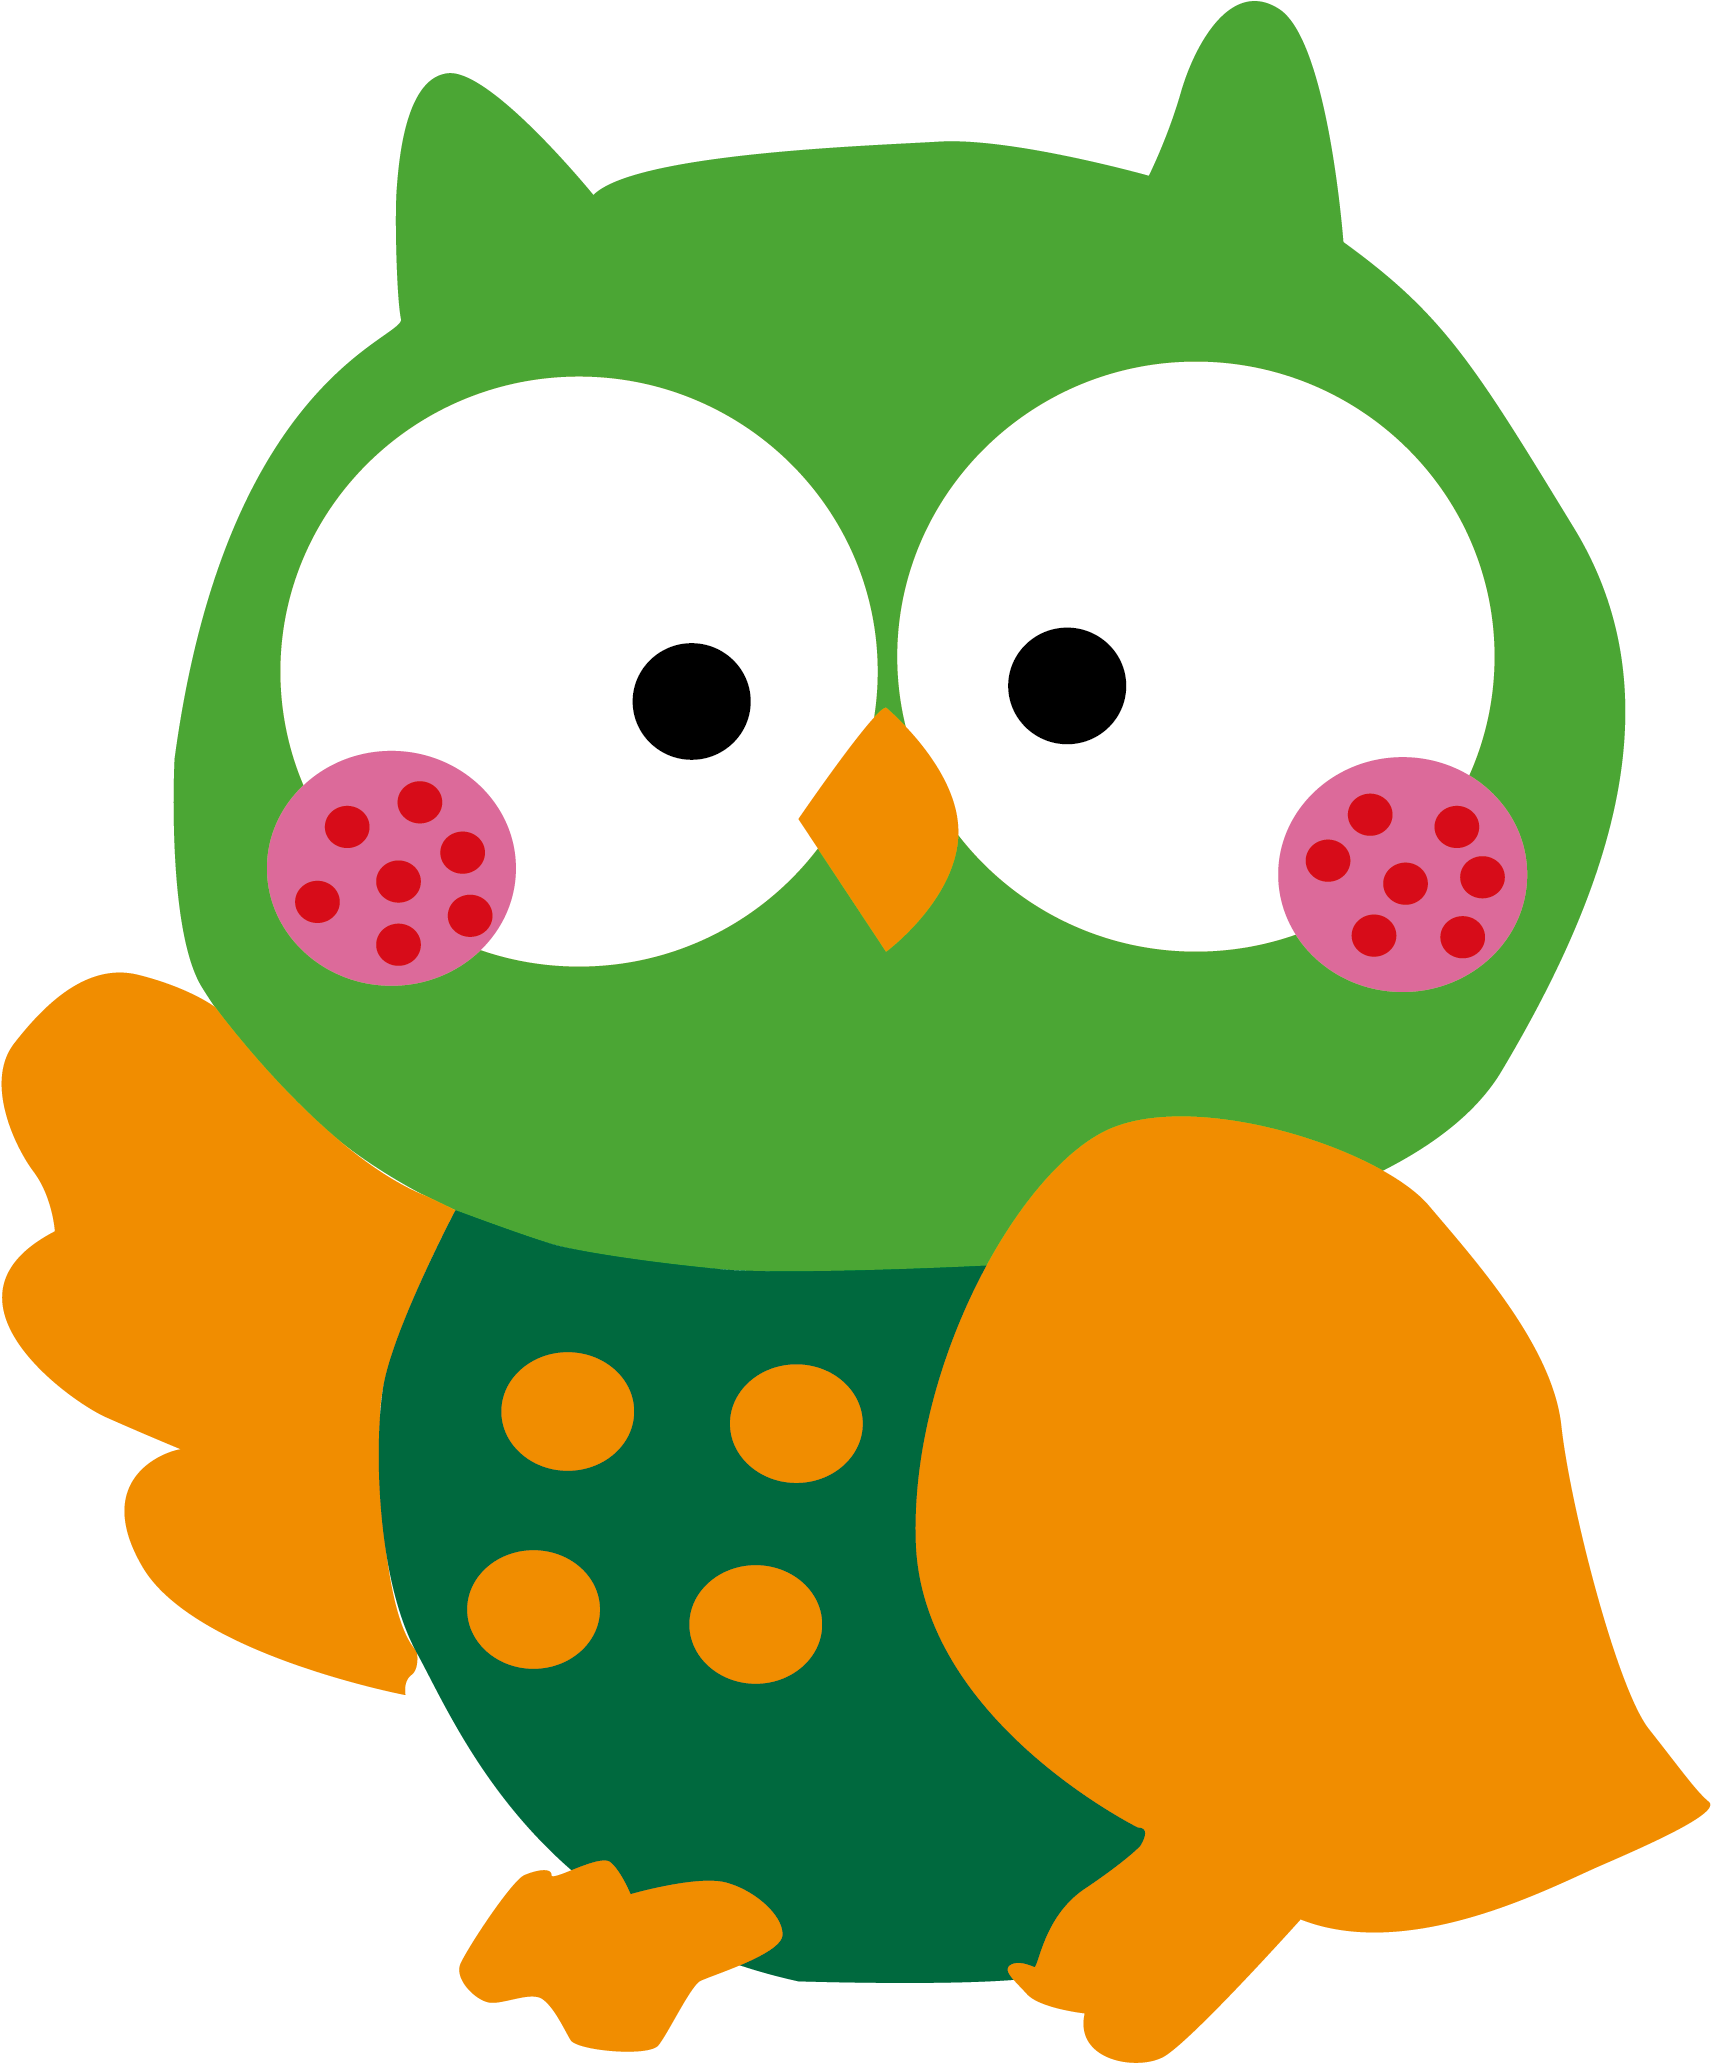 Colorful Cartoon Owl Illustration